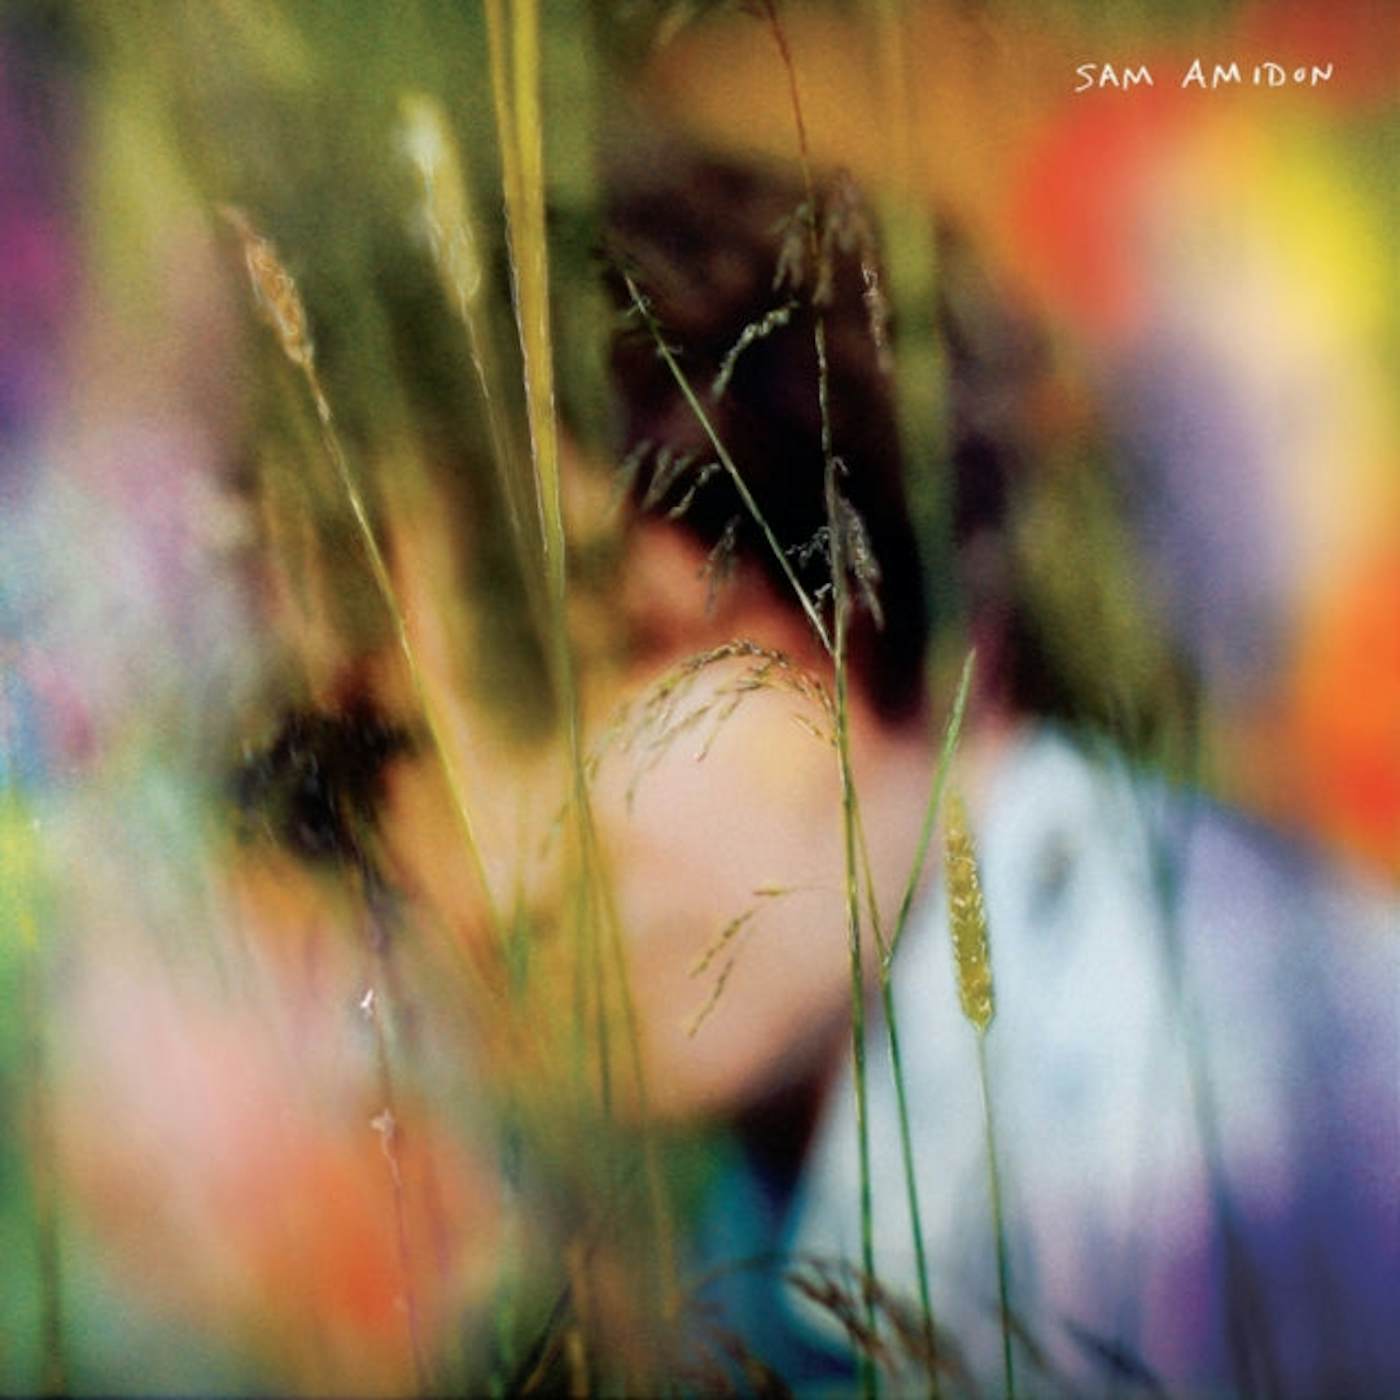 Sam Amidon LP Vinyl Record - Sam Amidon